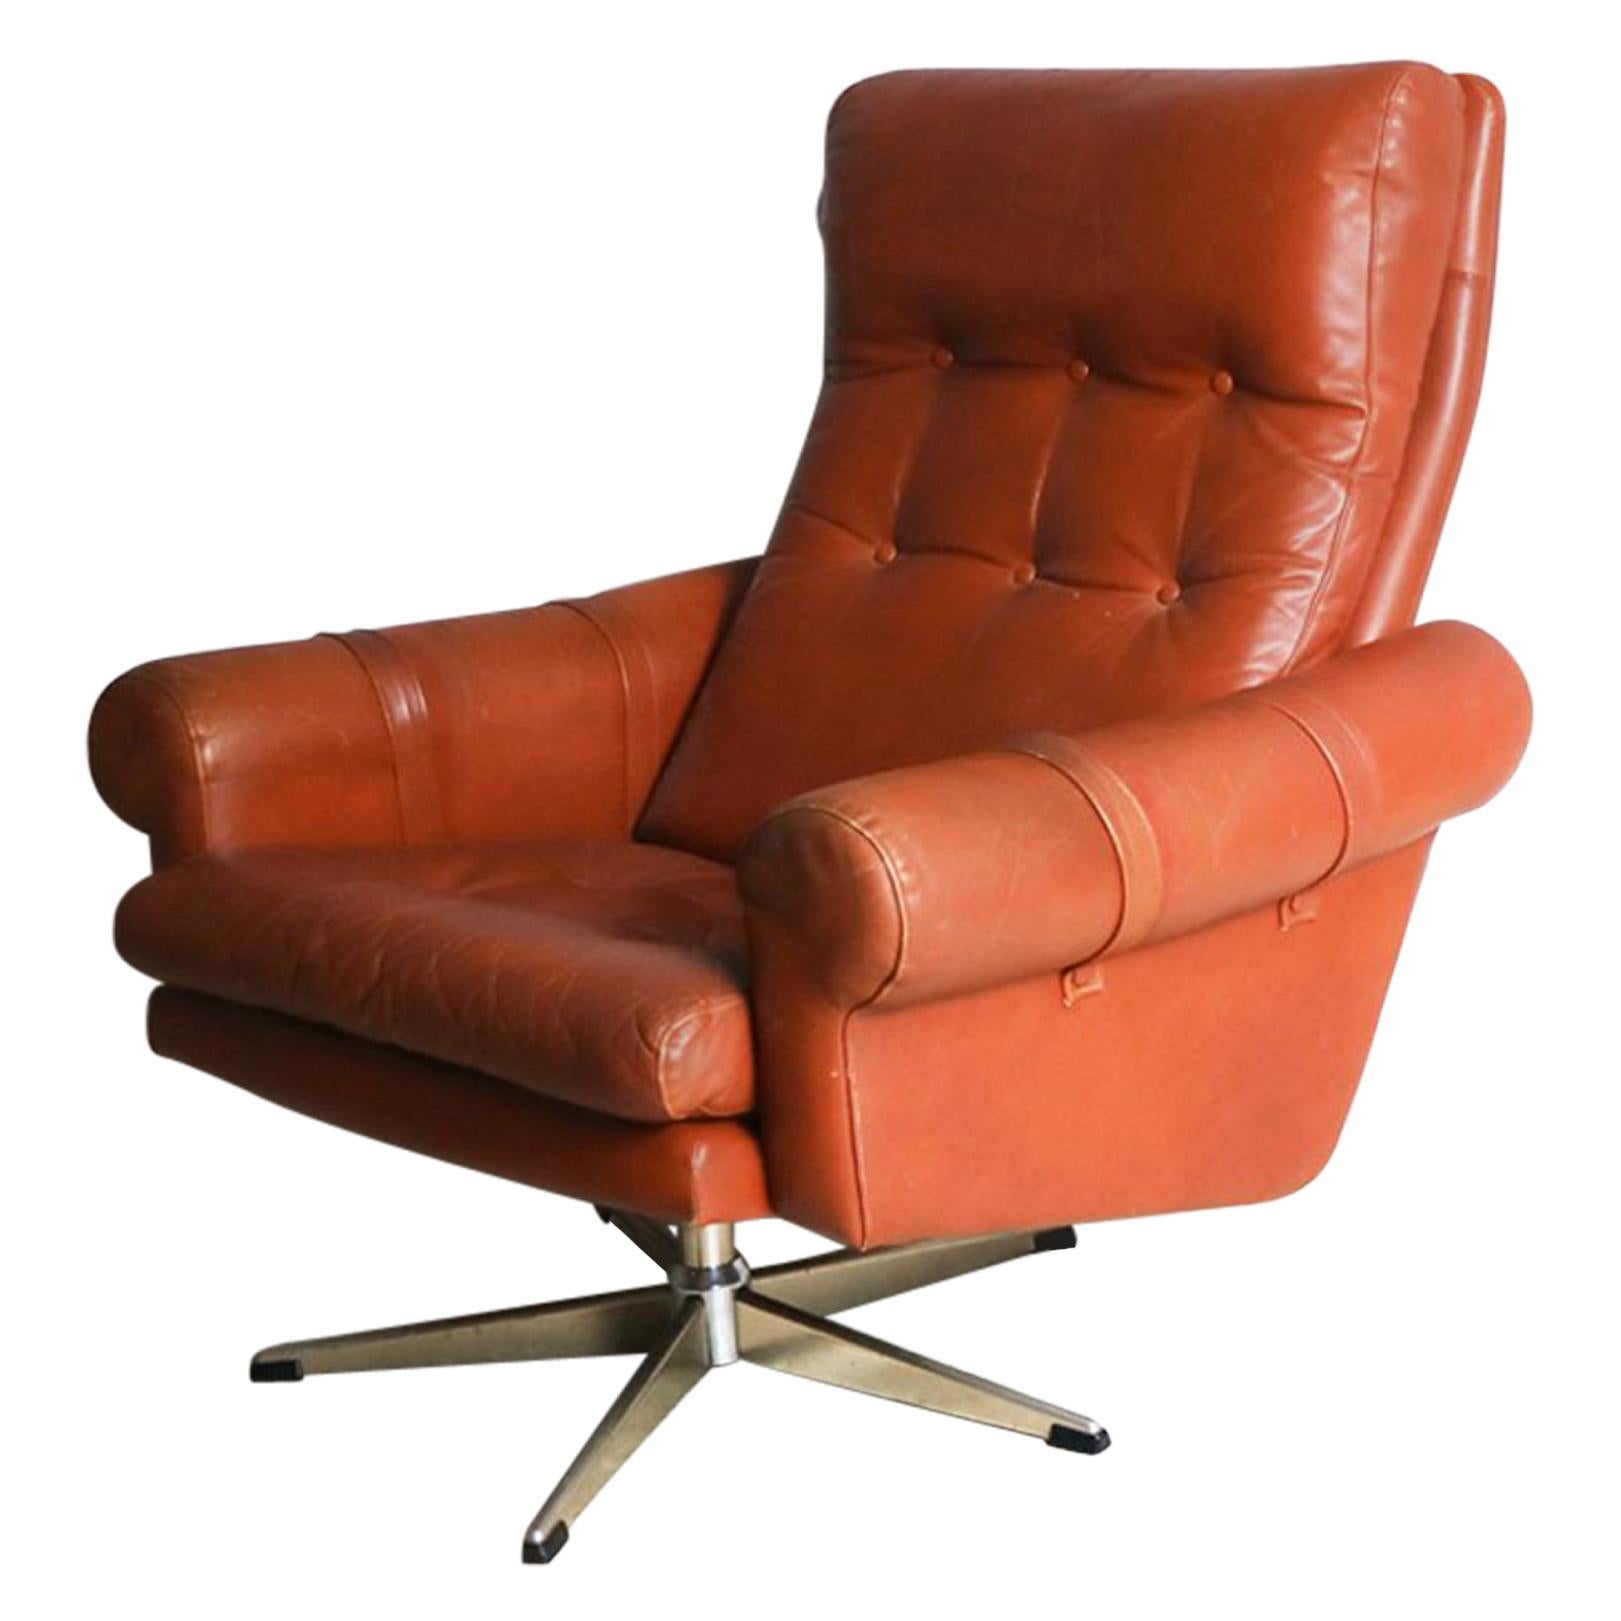 1970s Danish Midcentury Leather Swivel Armchair For Sale